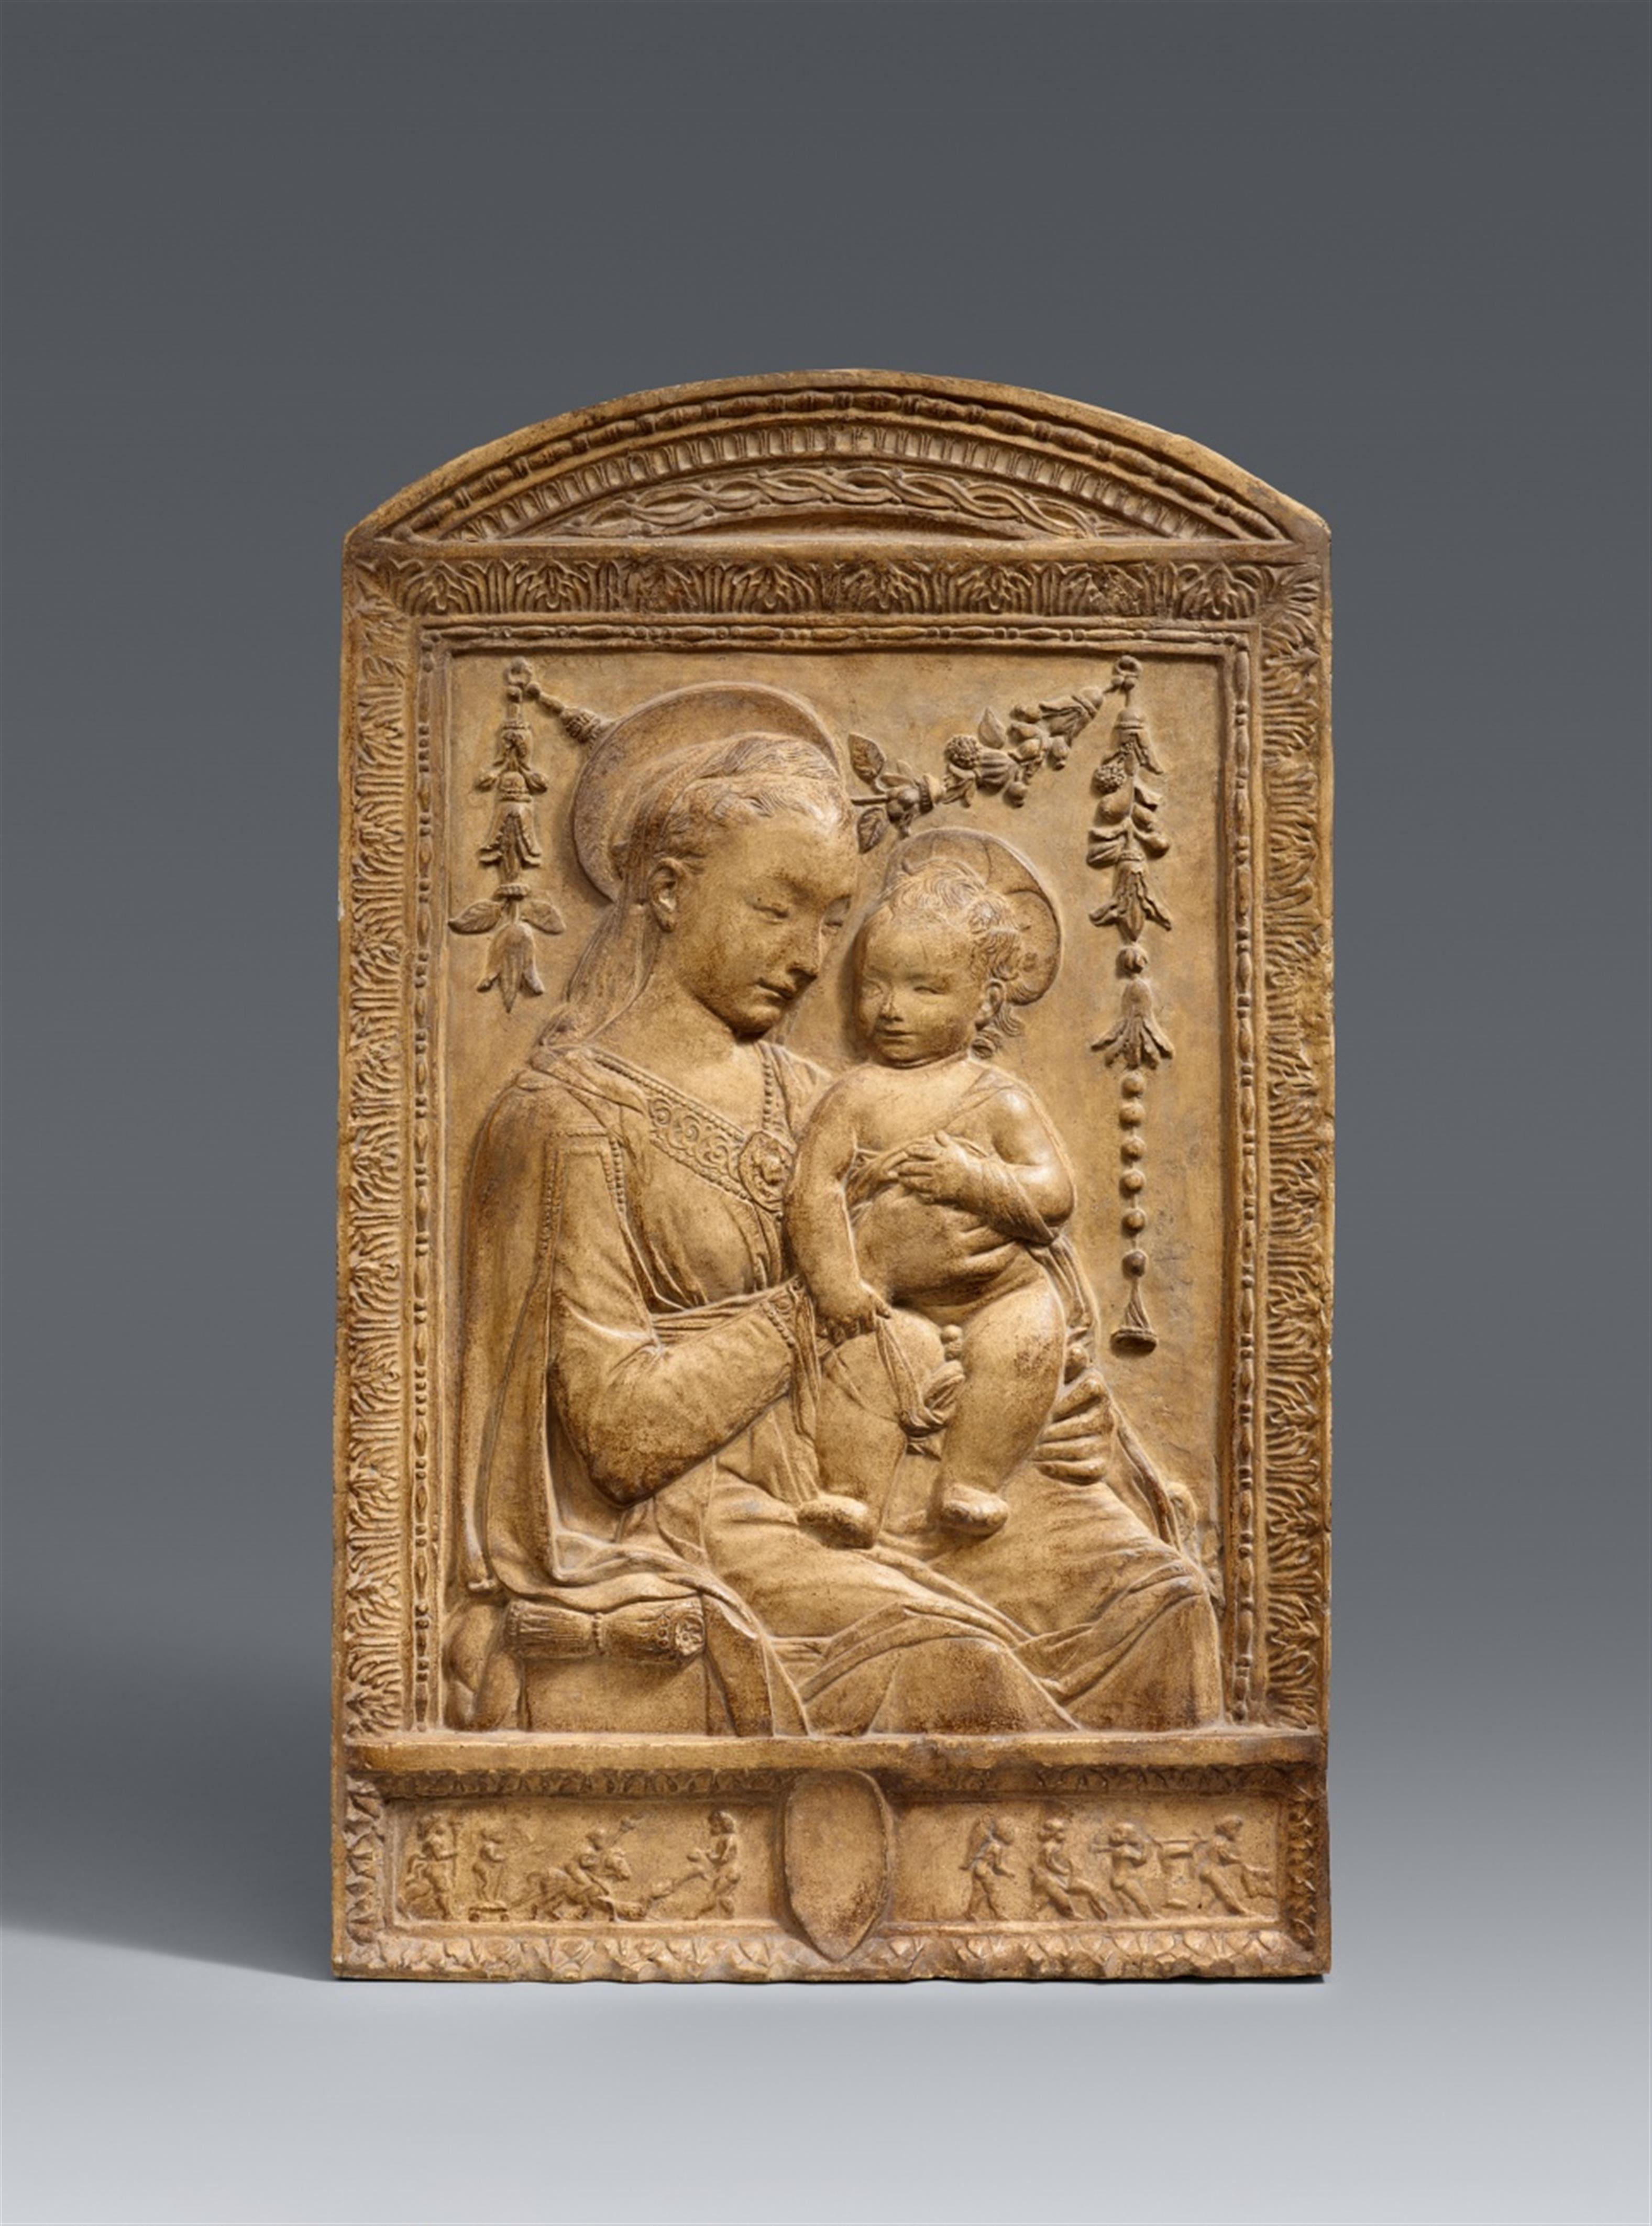 Antonio Rossellino, studio of - A plaster relief of the Virgin and Child from the workshop of Antonio Rossellino